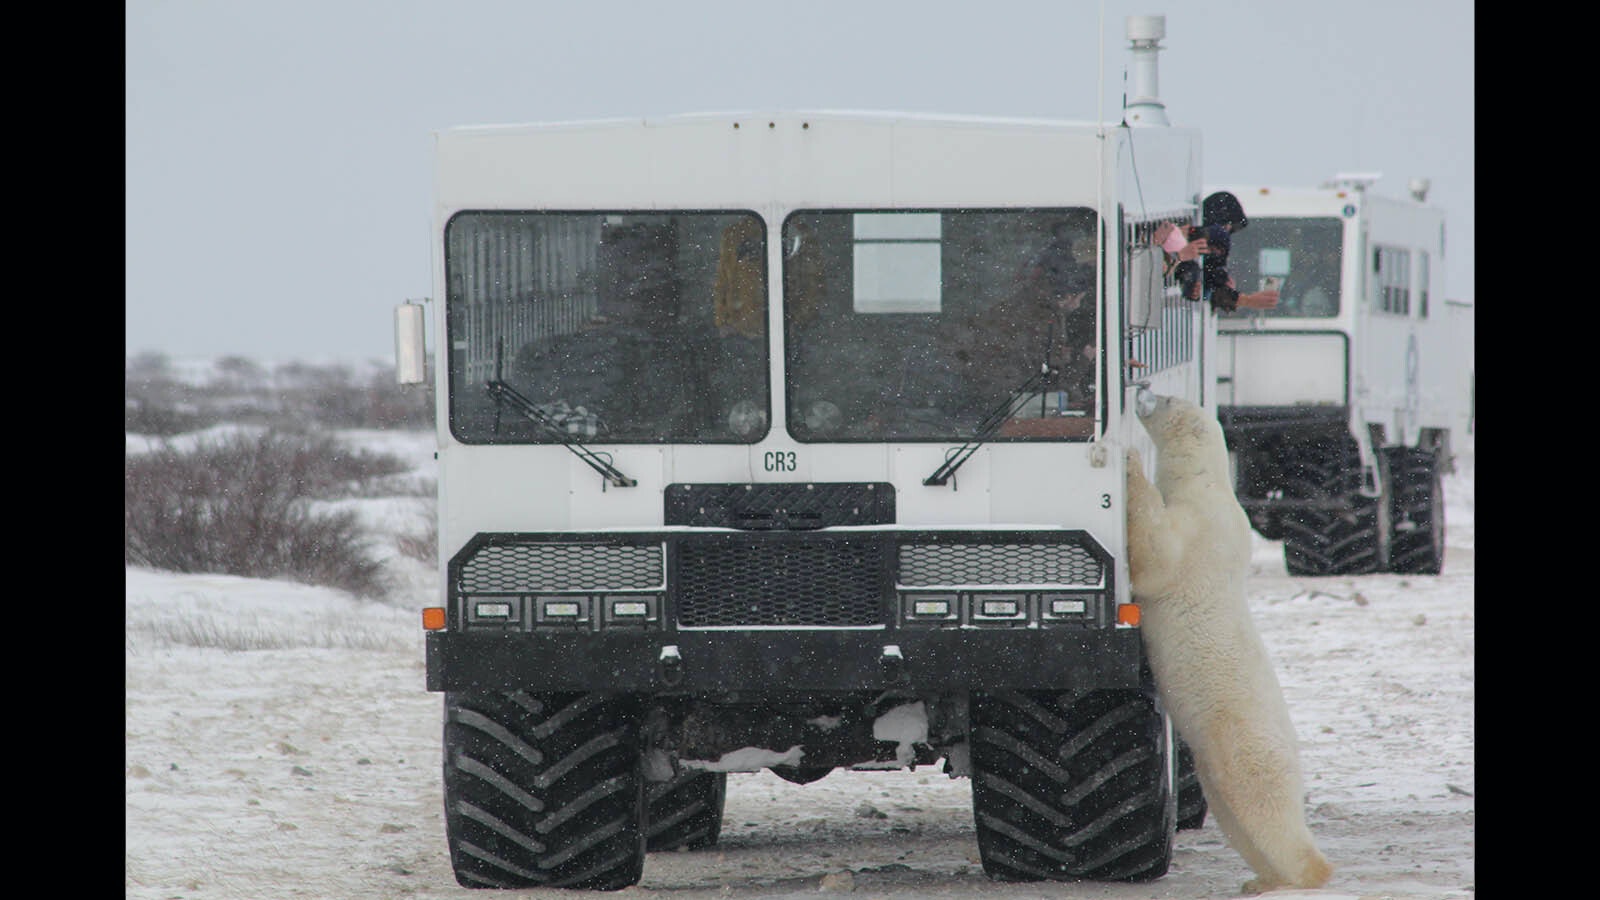 These tundra buggies were built for polar bear viewing along the Hudson Bay near Churchill, Manitoba, Canada.